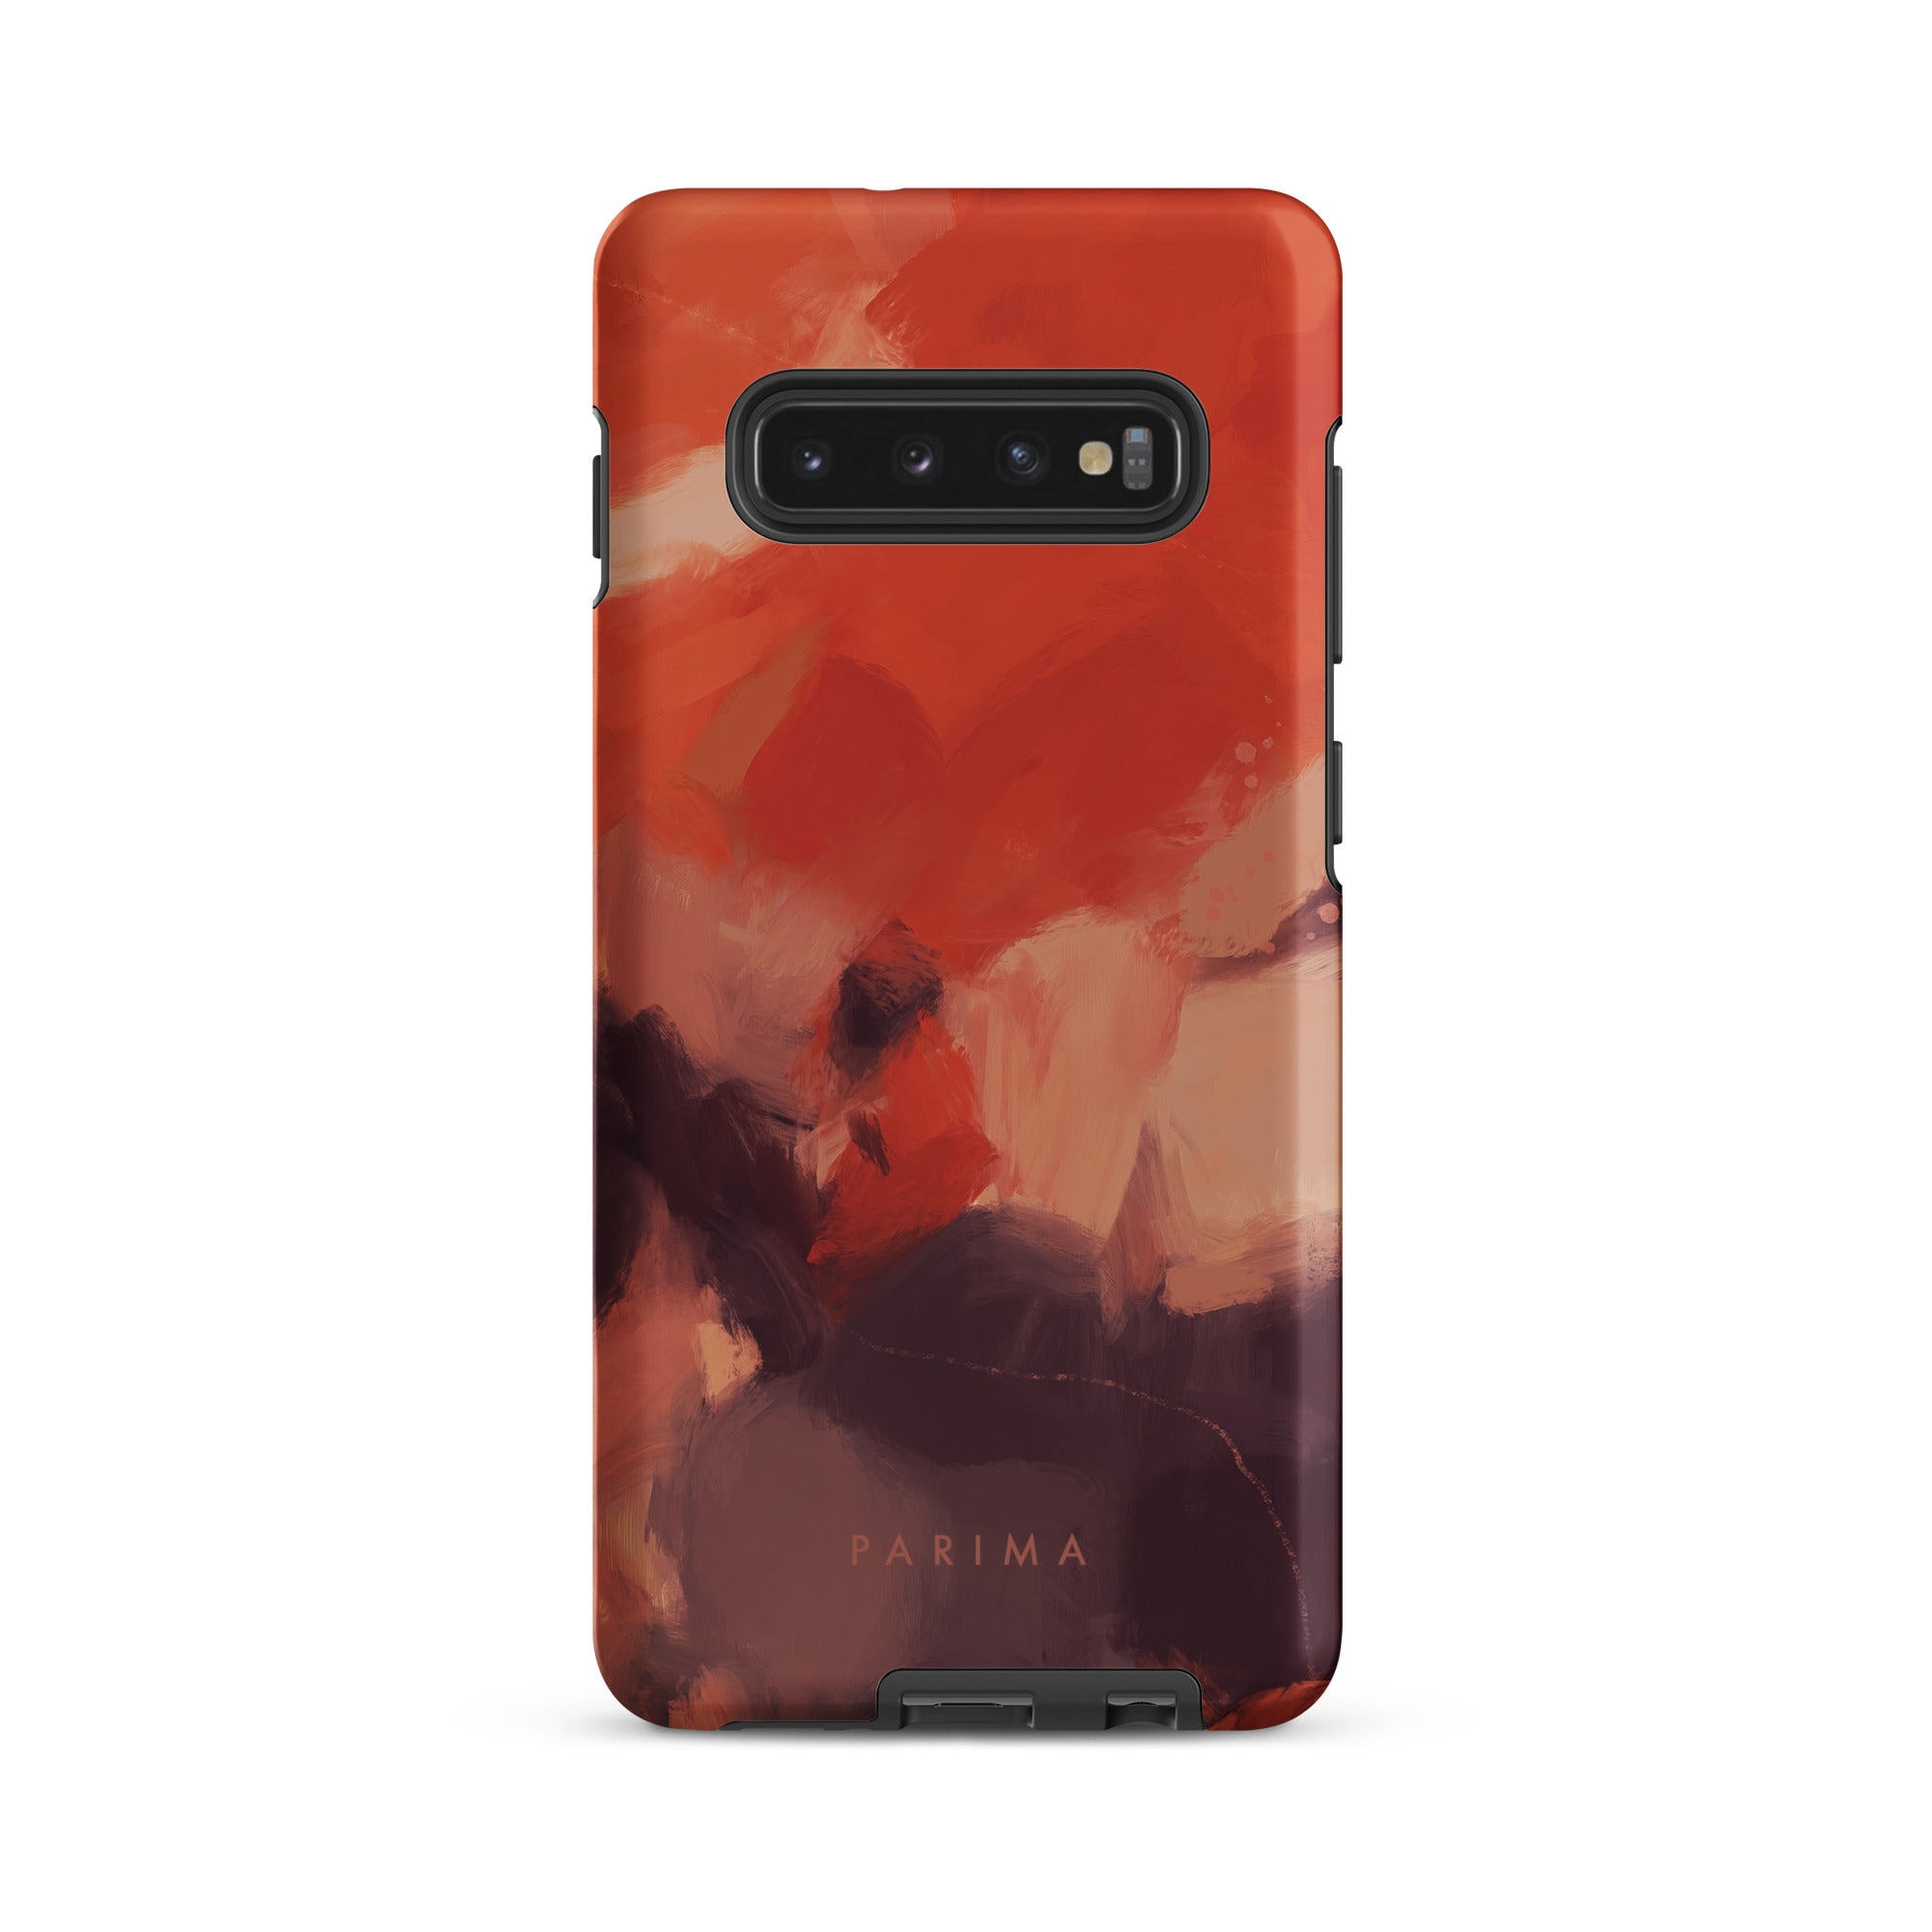 Autumn, orange and purple abstract art on Samsung Galaxy S10 Plus tough case by Parima Studio